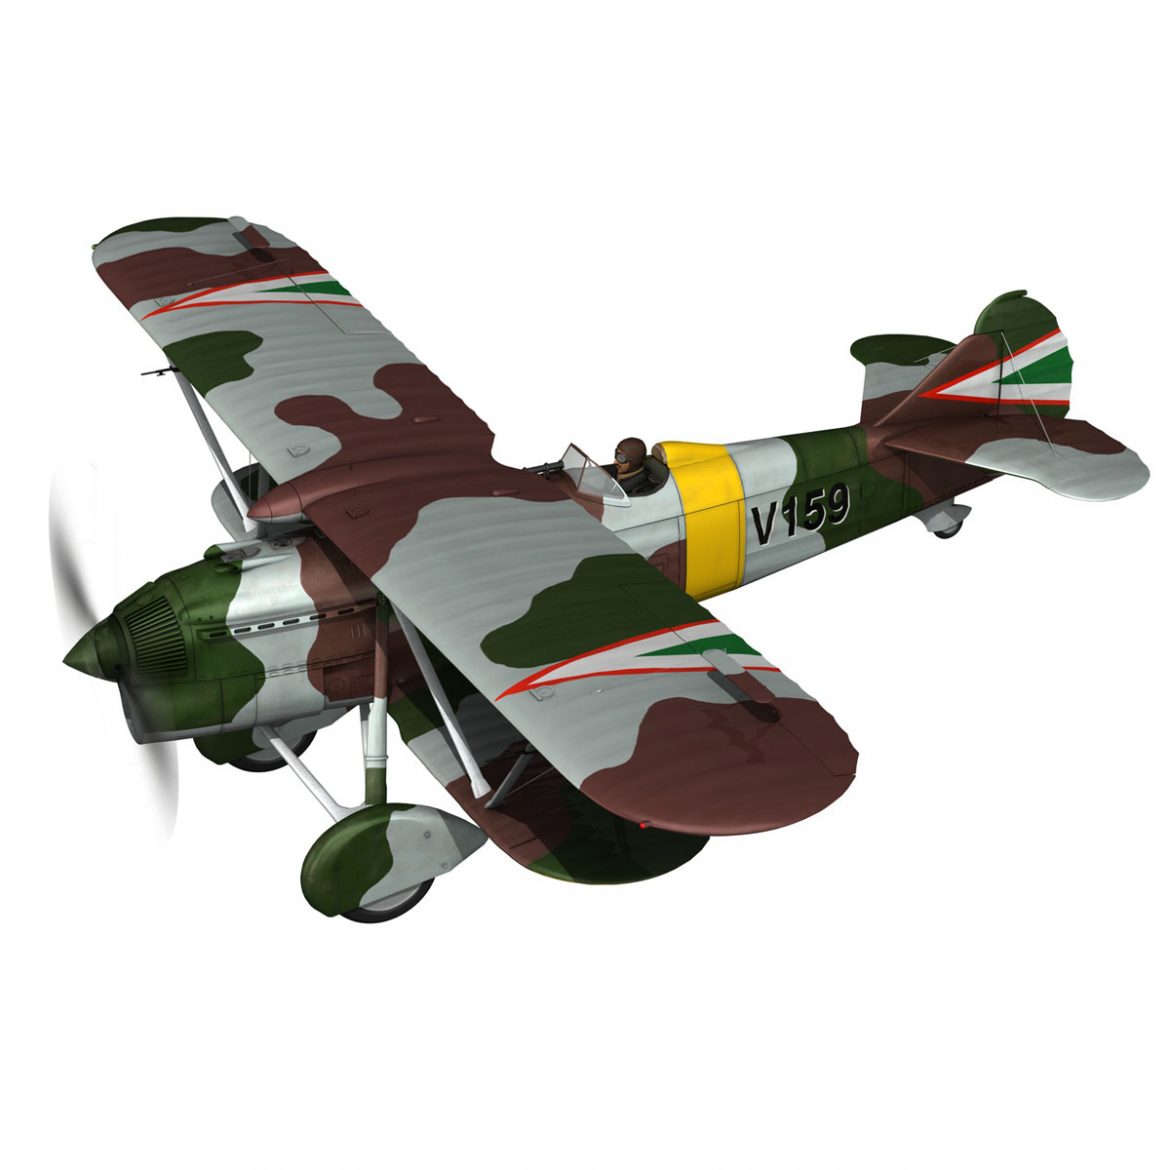 fiat cr.32 – hungarian royal air force – v159 3d model fbx c4d lwo obj 299960